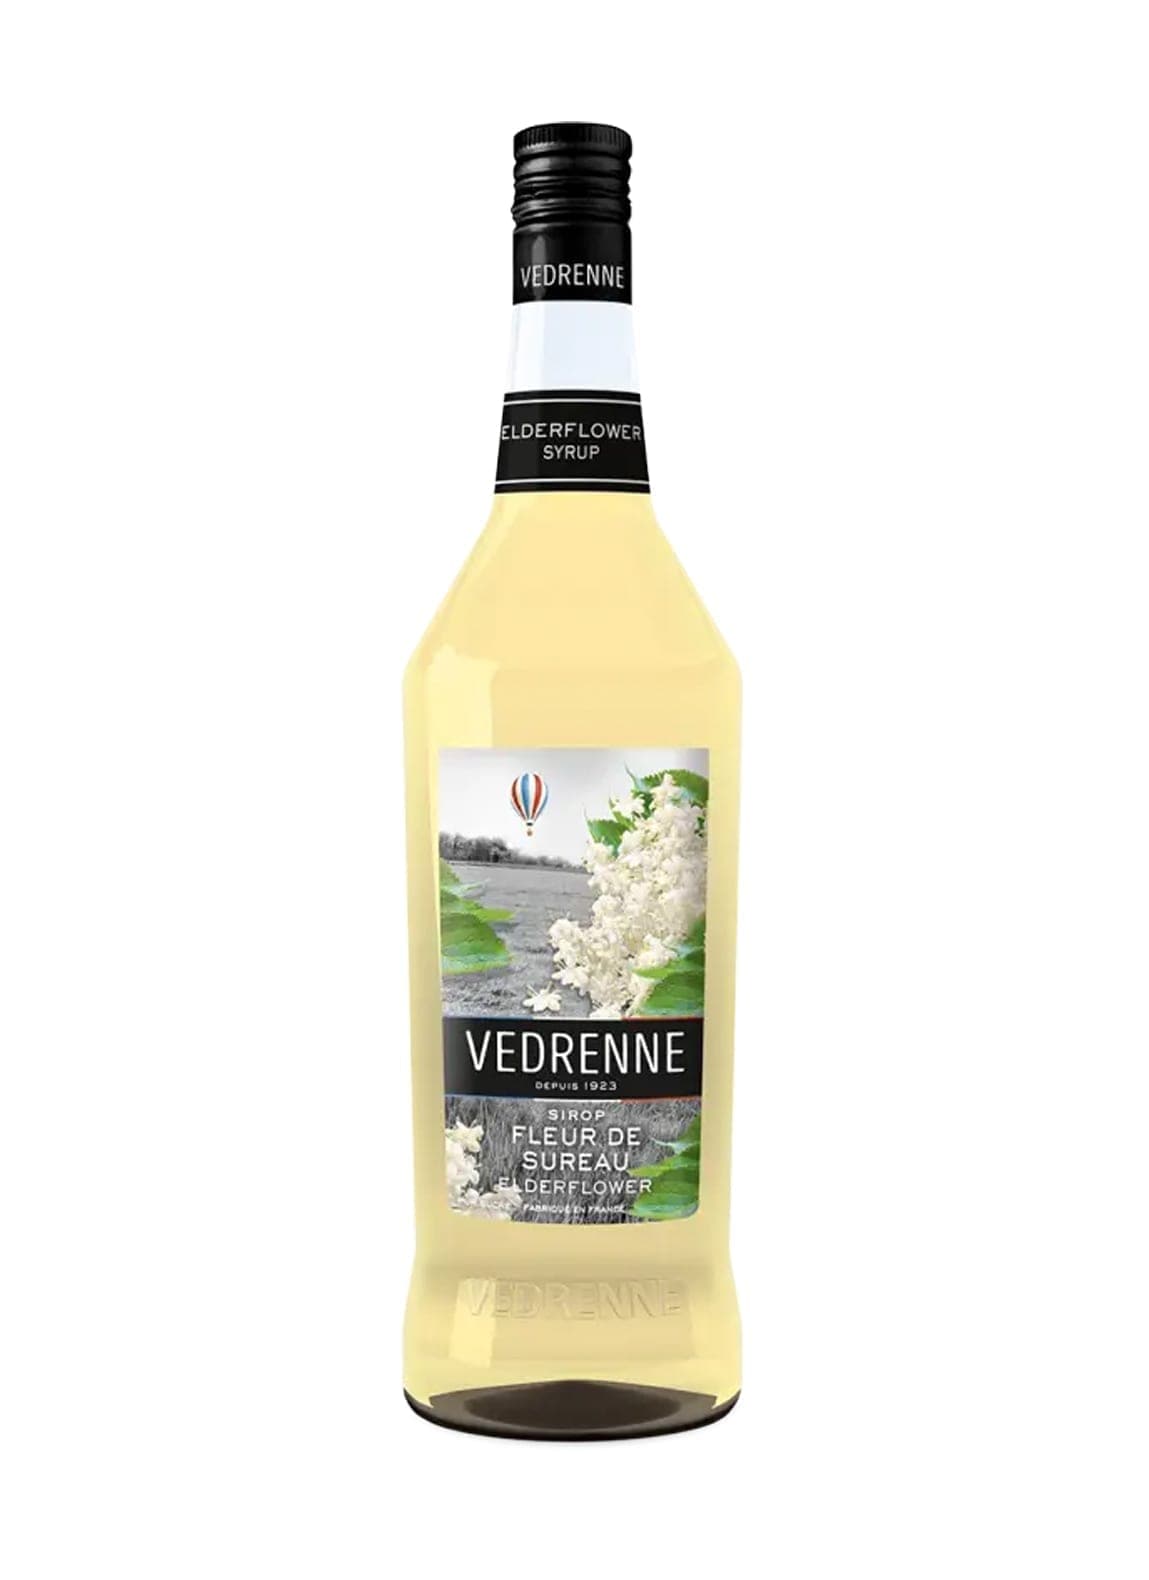 Vedrenne Sirop Fleur de Sureau (Elderflower cordial) 1000ml | Syrup | Shop online at Spirits of France